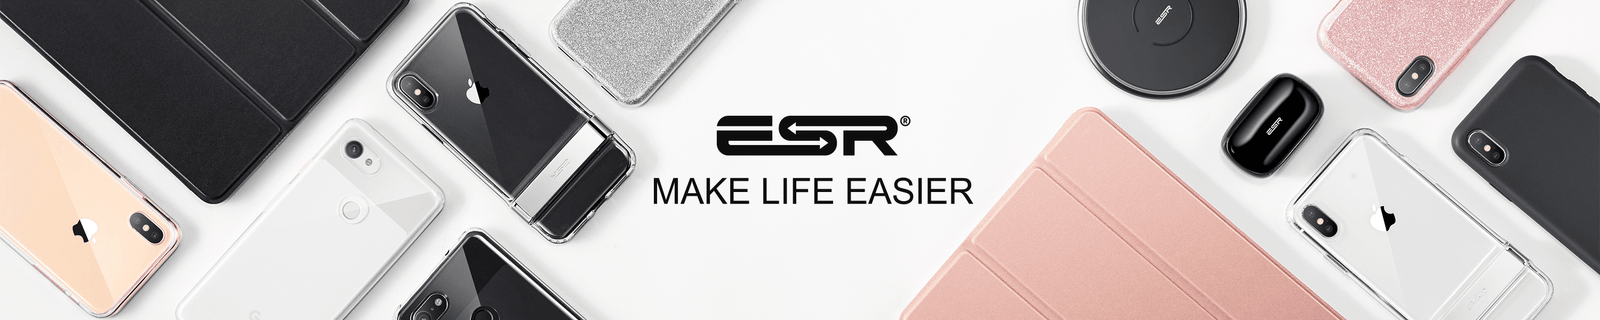 ESR Official Online Store in Pakistan